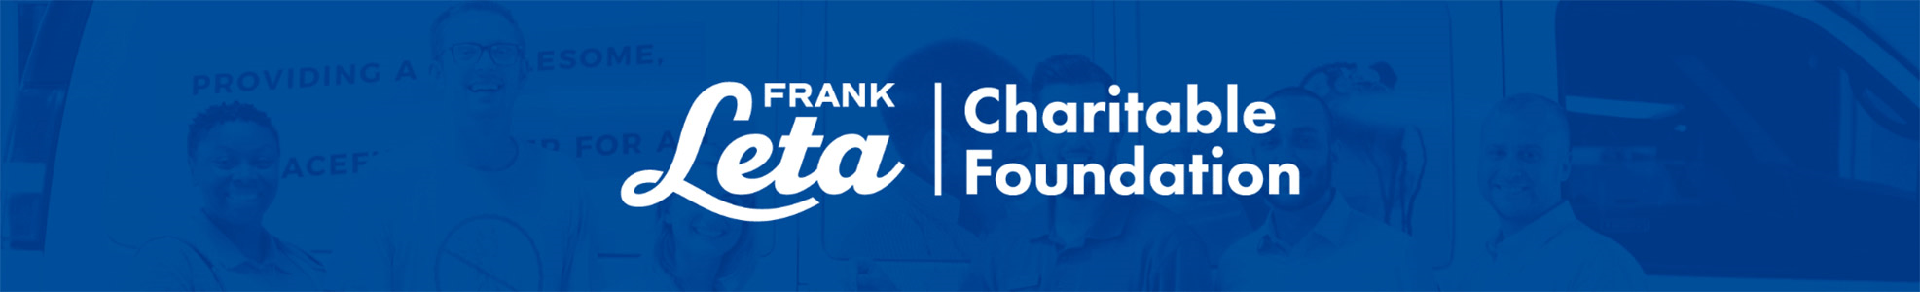 Frank Leta Charitable Foundation